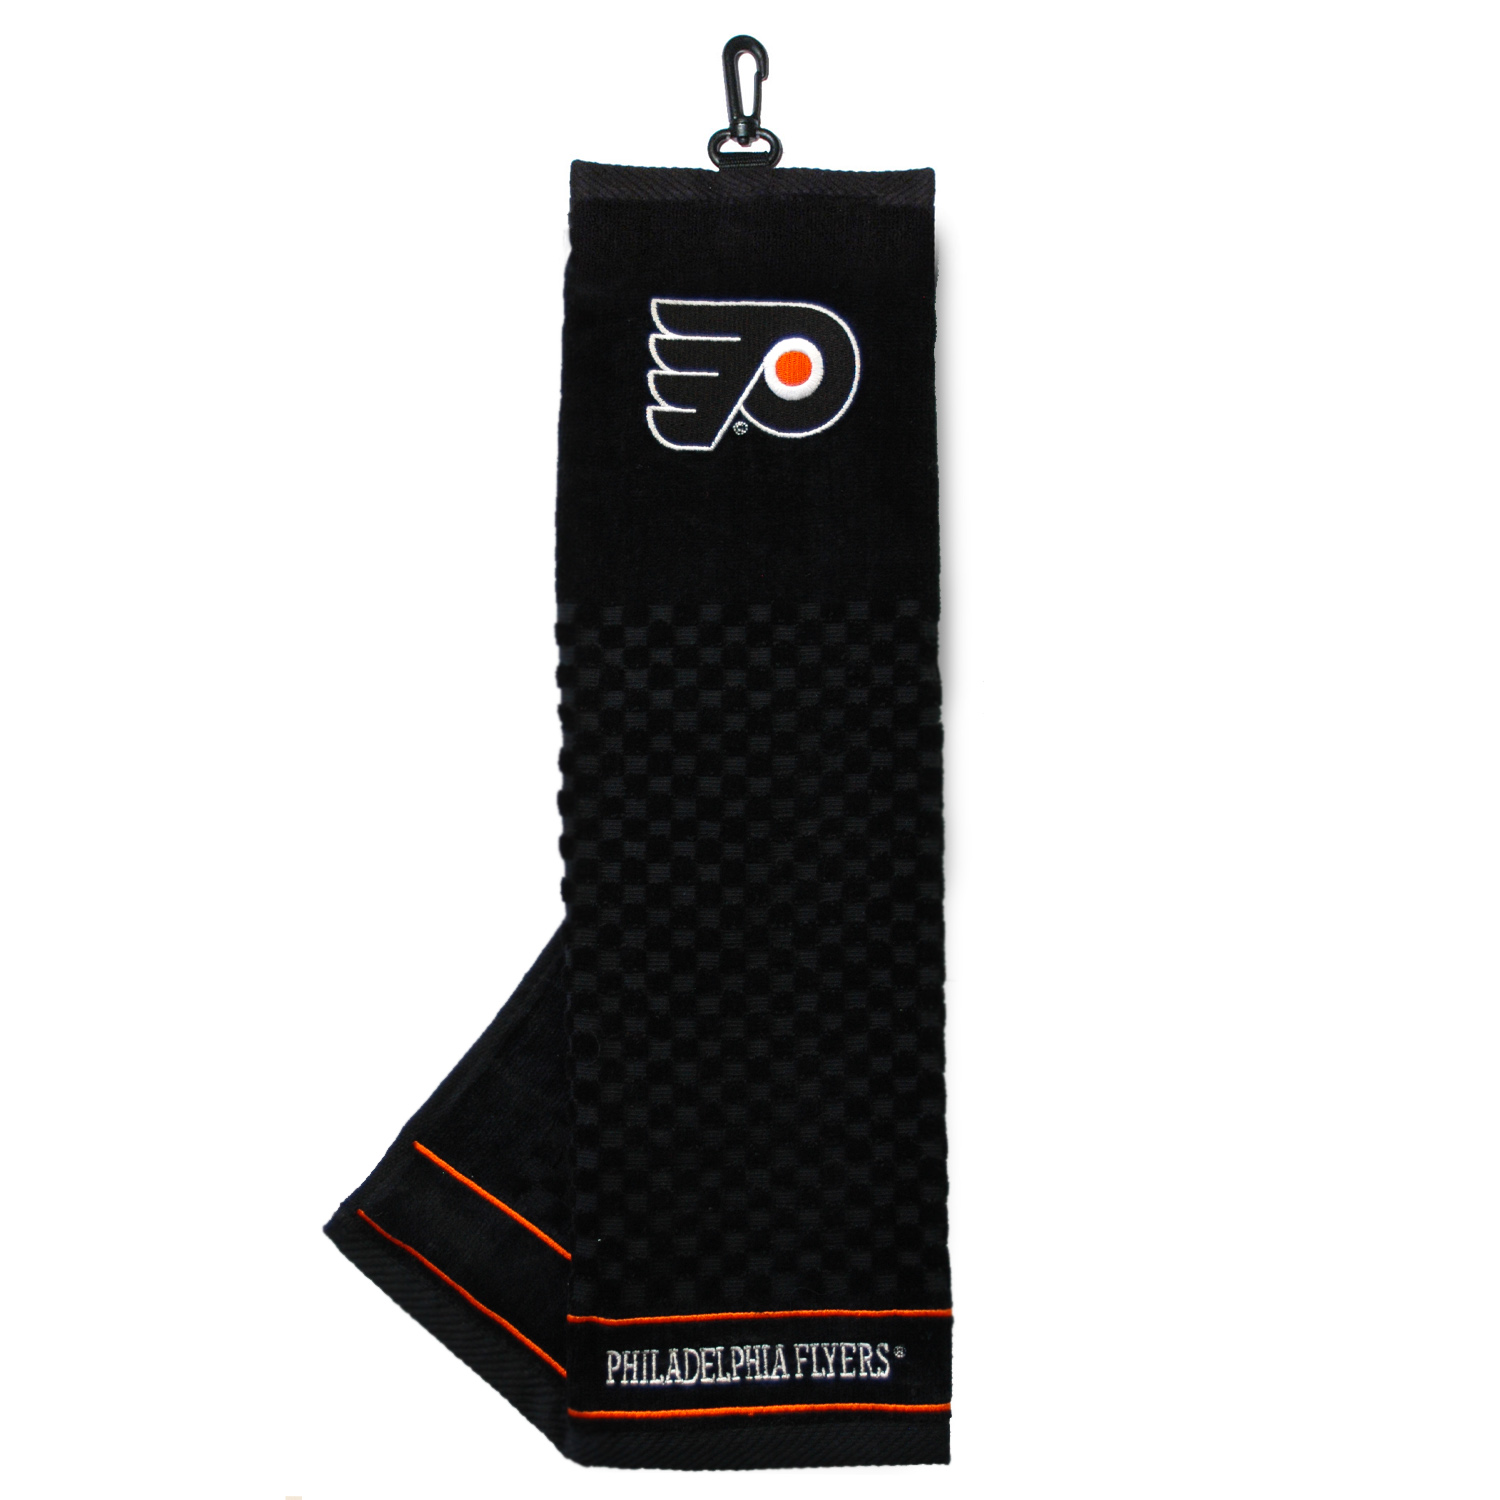 Philadelphia Flyers Embroidered Towel